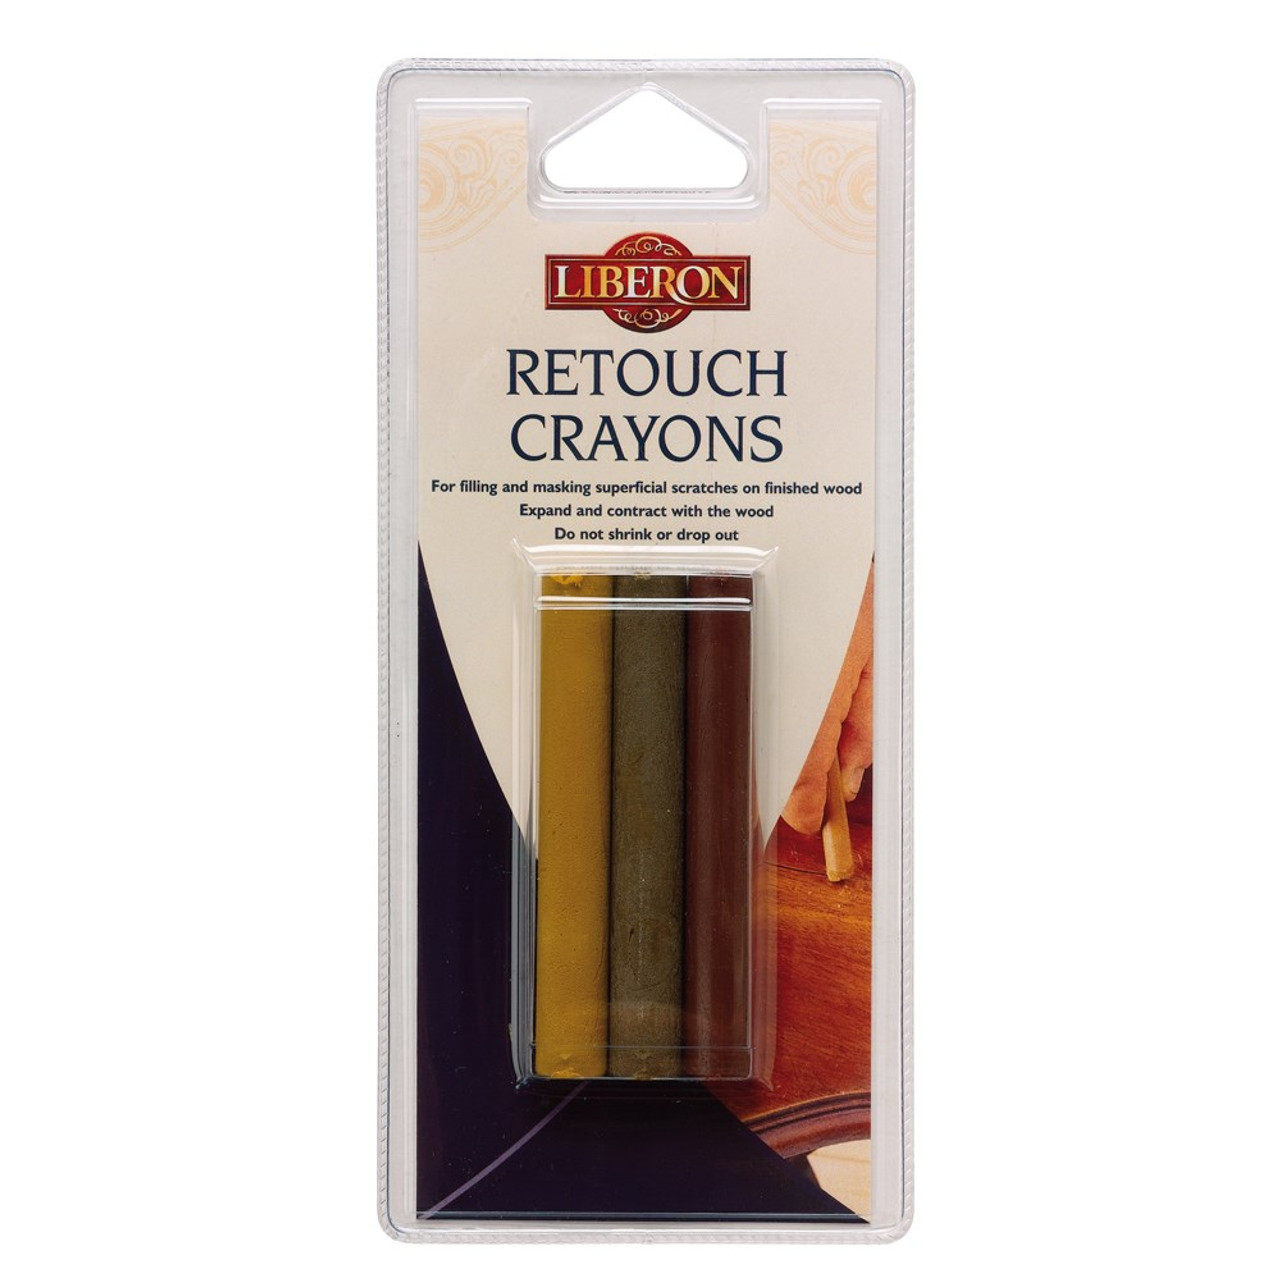 LIBERON Crayon de retouche - Réparation bois, Acajou, 30mL